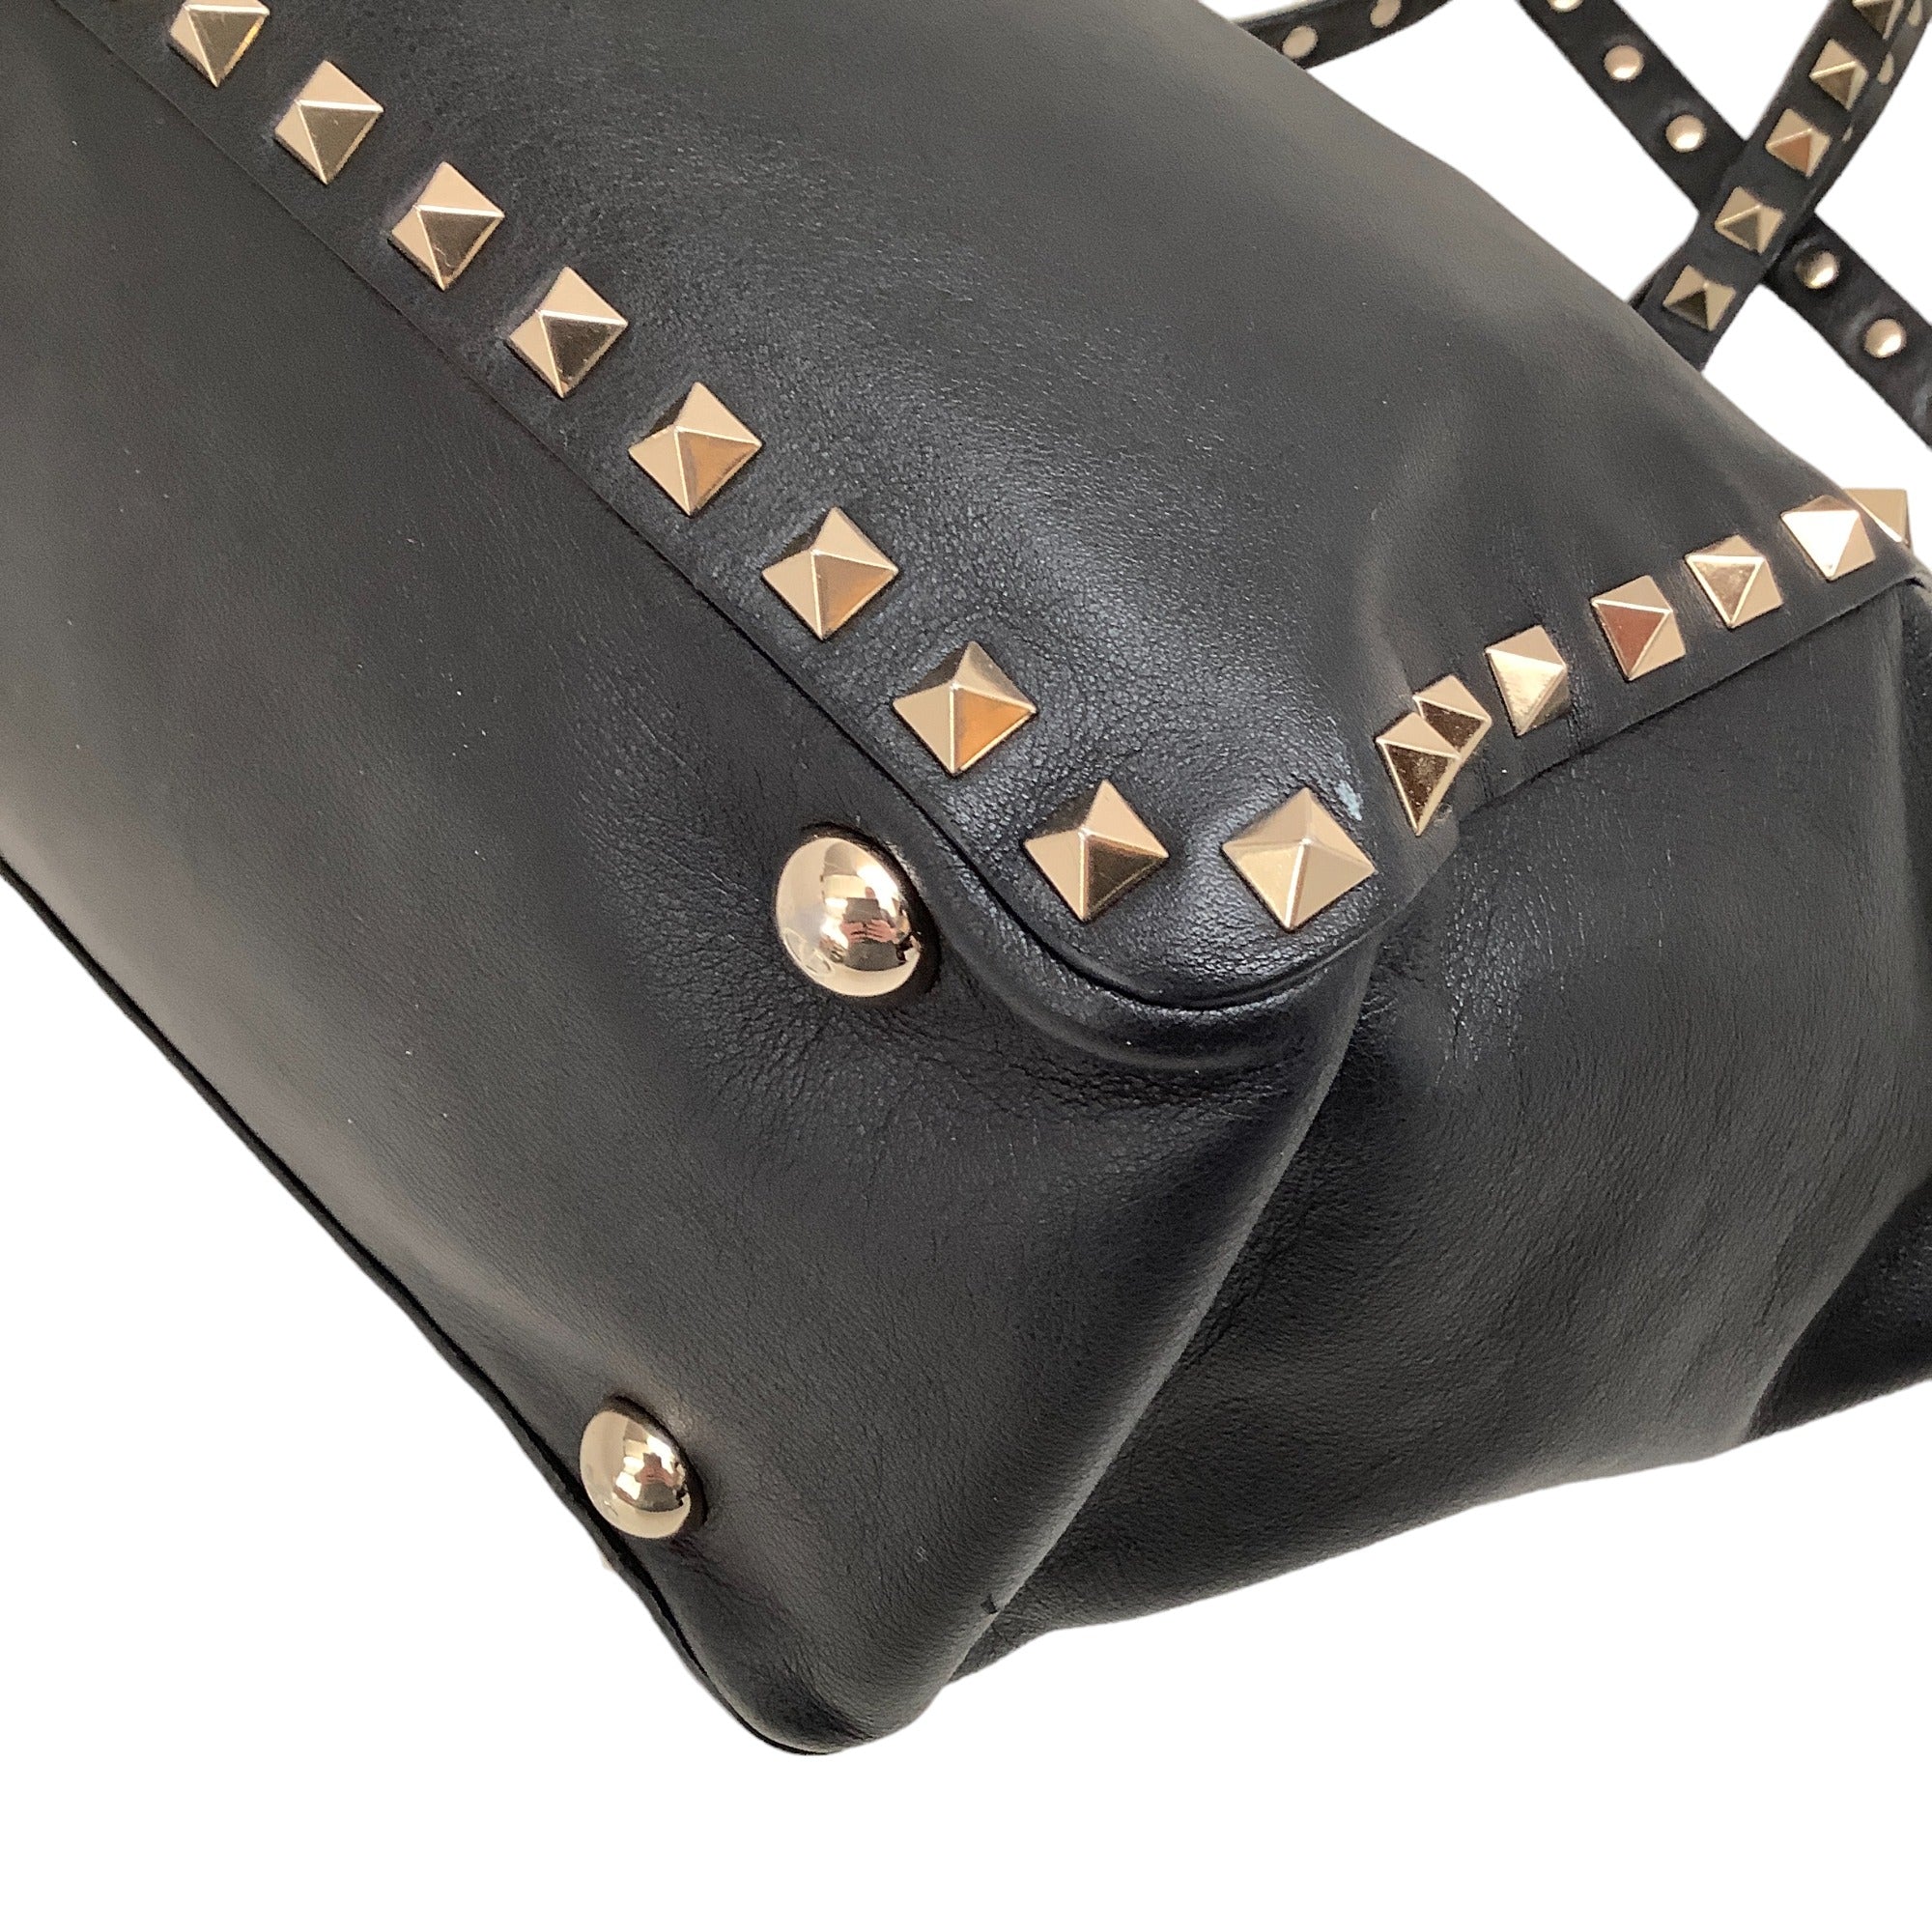 Valentino Black Leather Small Rockstud Bag with Crossbody Strap